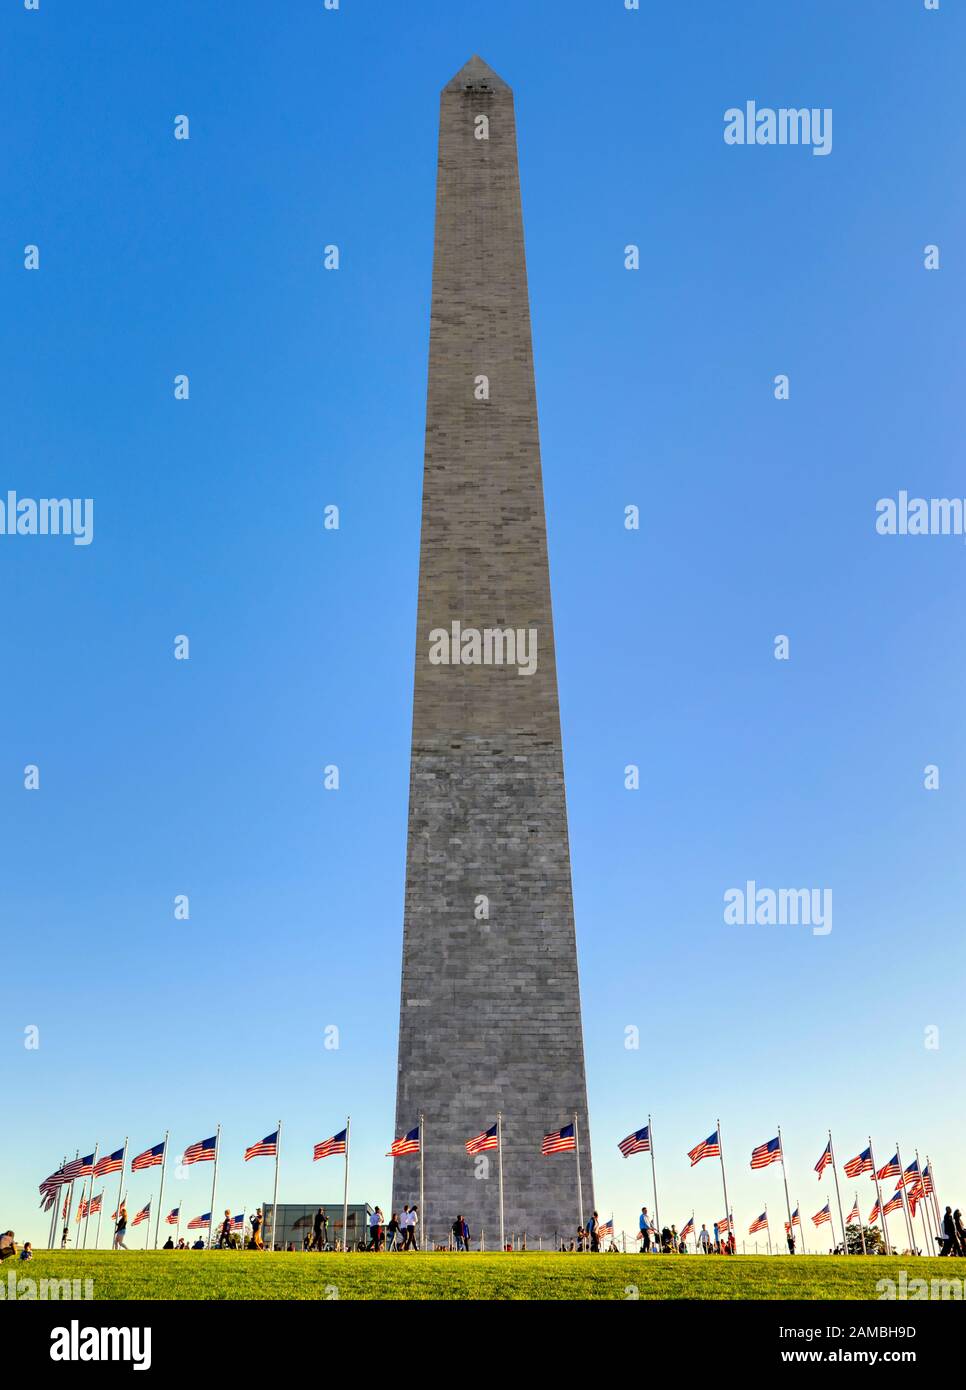 The Washington Monument on the National Mall in Washington, DC. Stock Photo